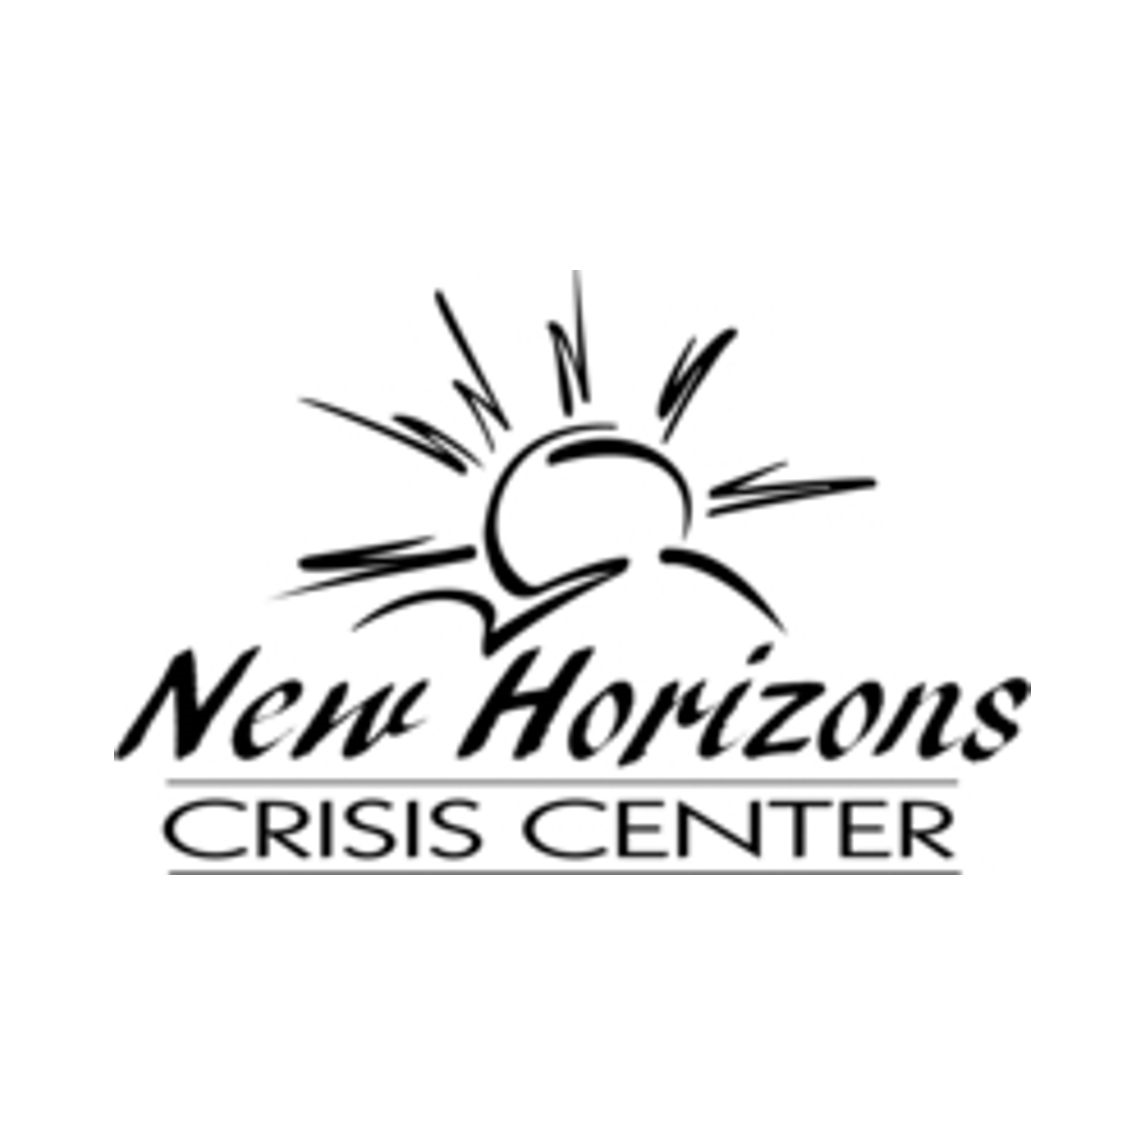 New Horizons Crisis Center's Image